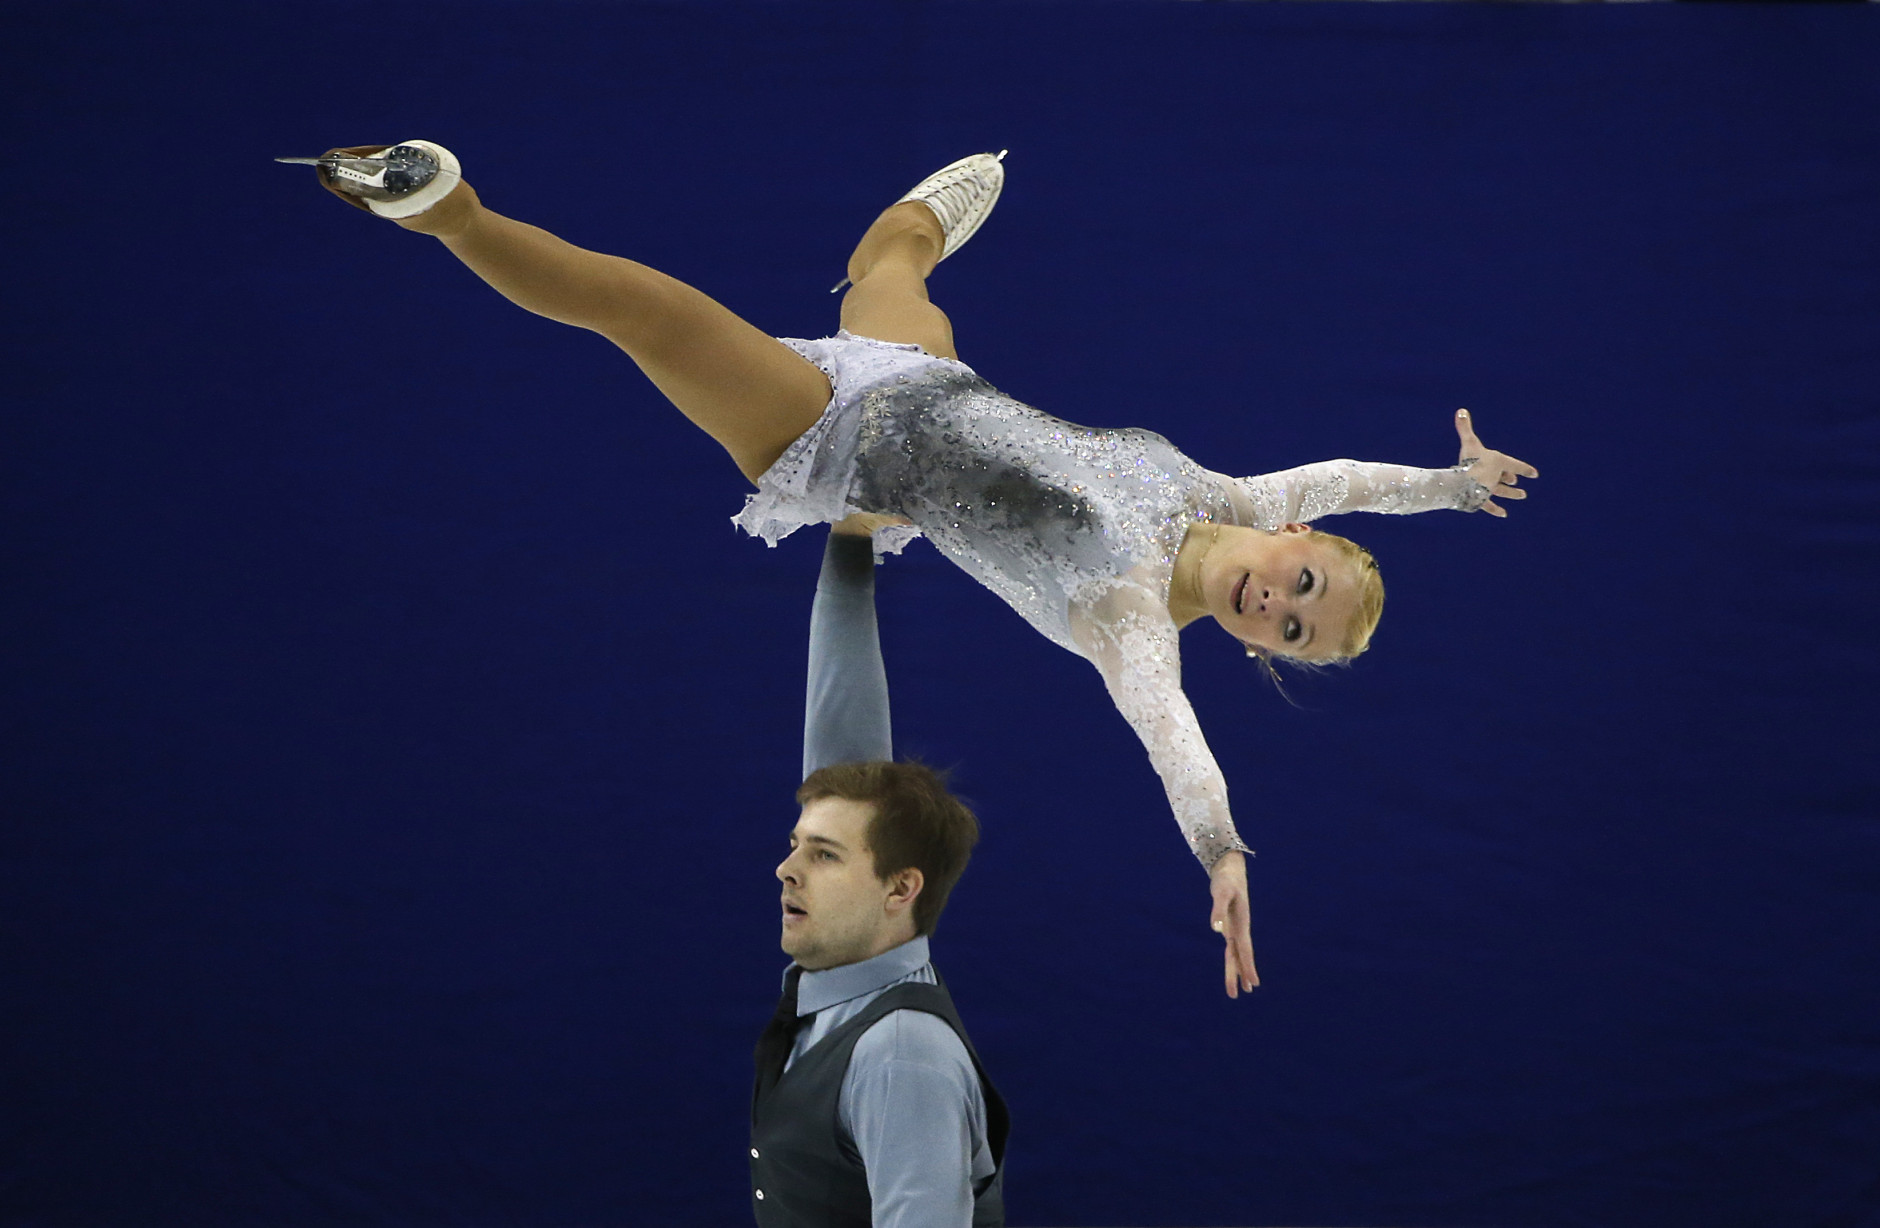 Maria Paliakova and Nikita Bochkov of Belarus perform during the Pairs Short Program in the ISU World Figure Skating Championship 2015 held at the Oriental Sports Center in Shanghai, China, Wednesday, March 25, 2015. (AP Photo/Ng Han Guan)